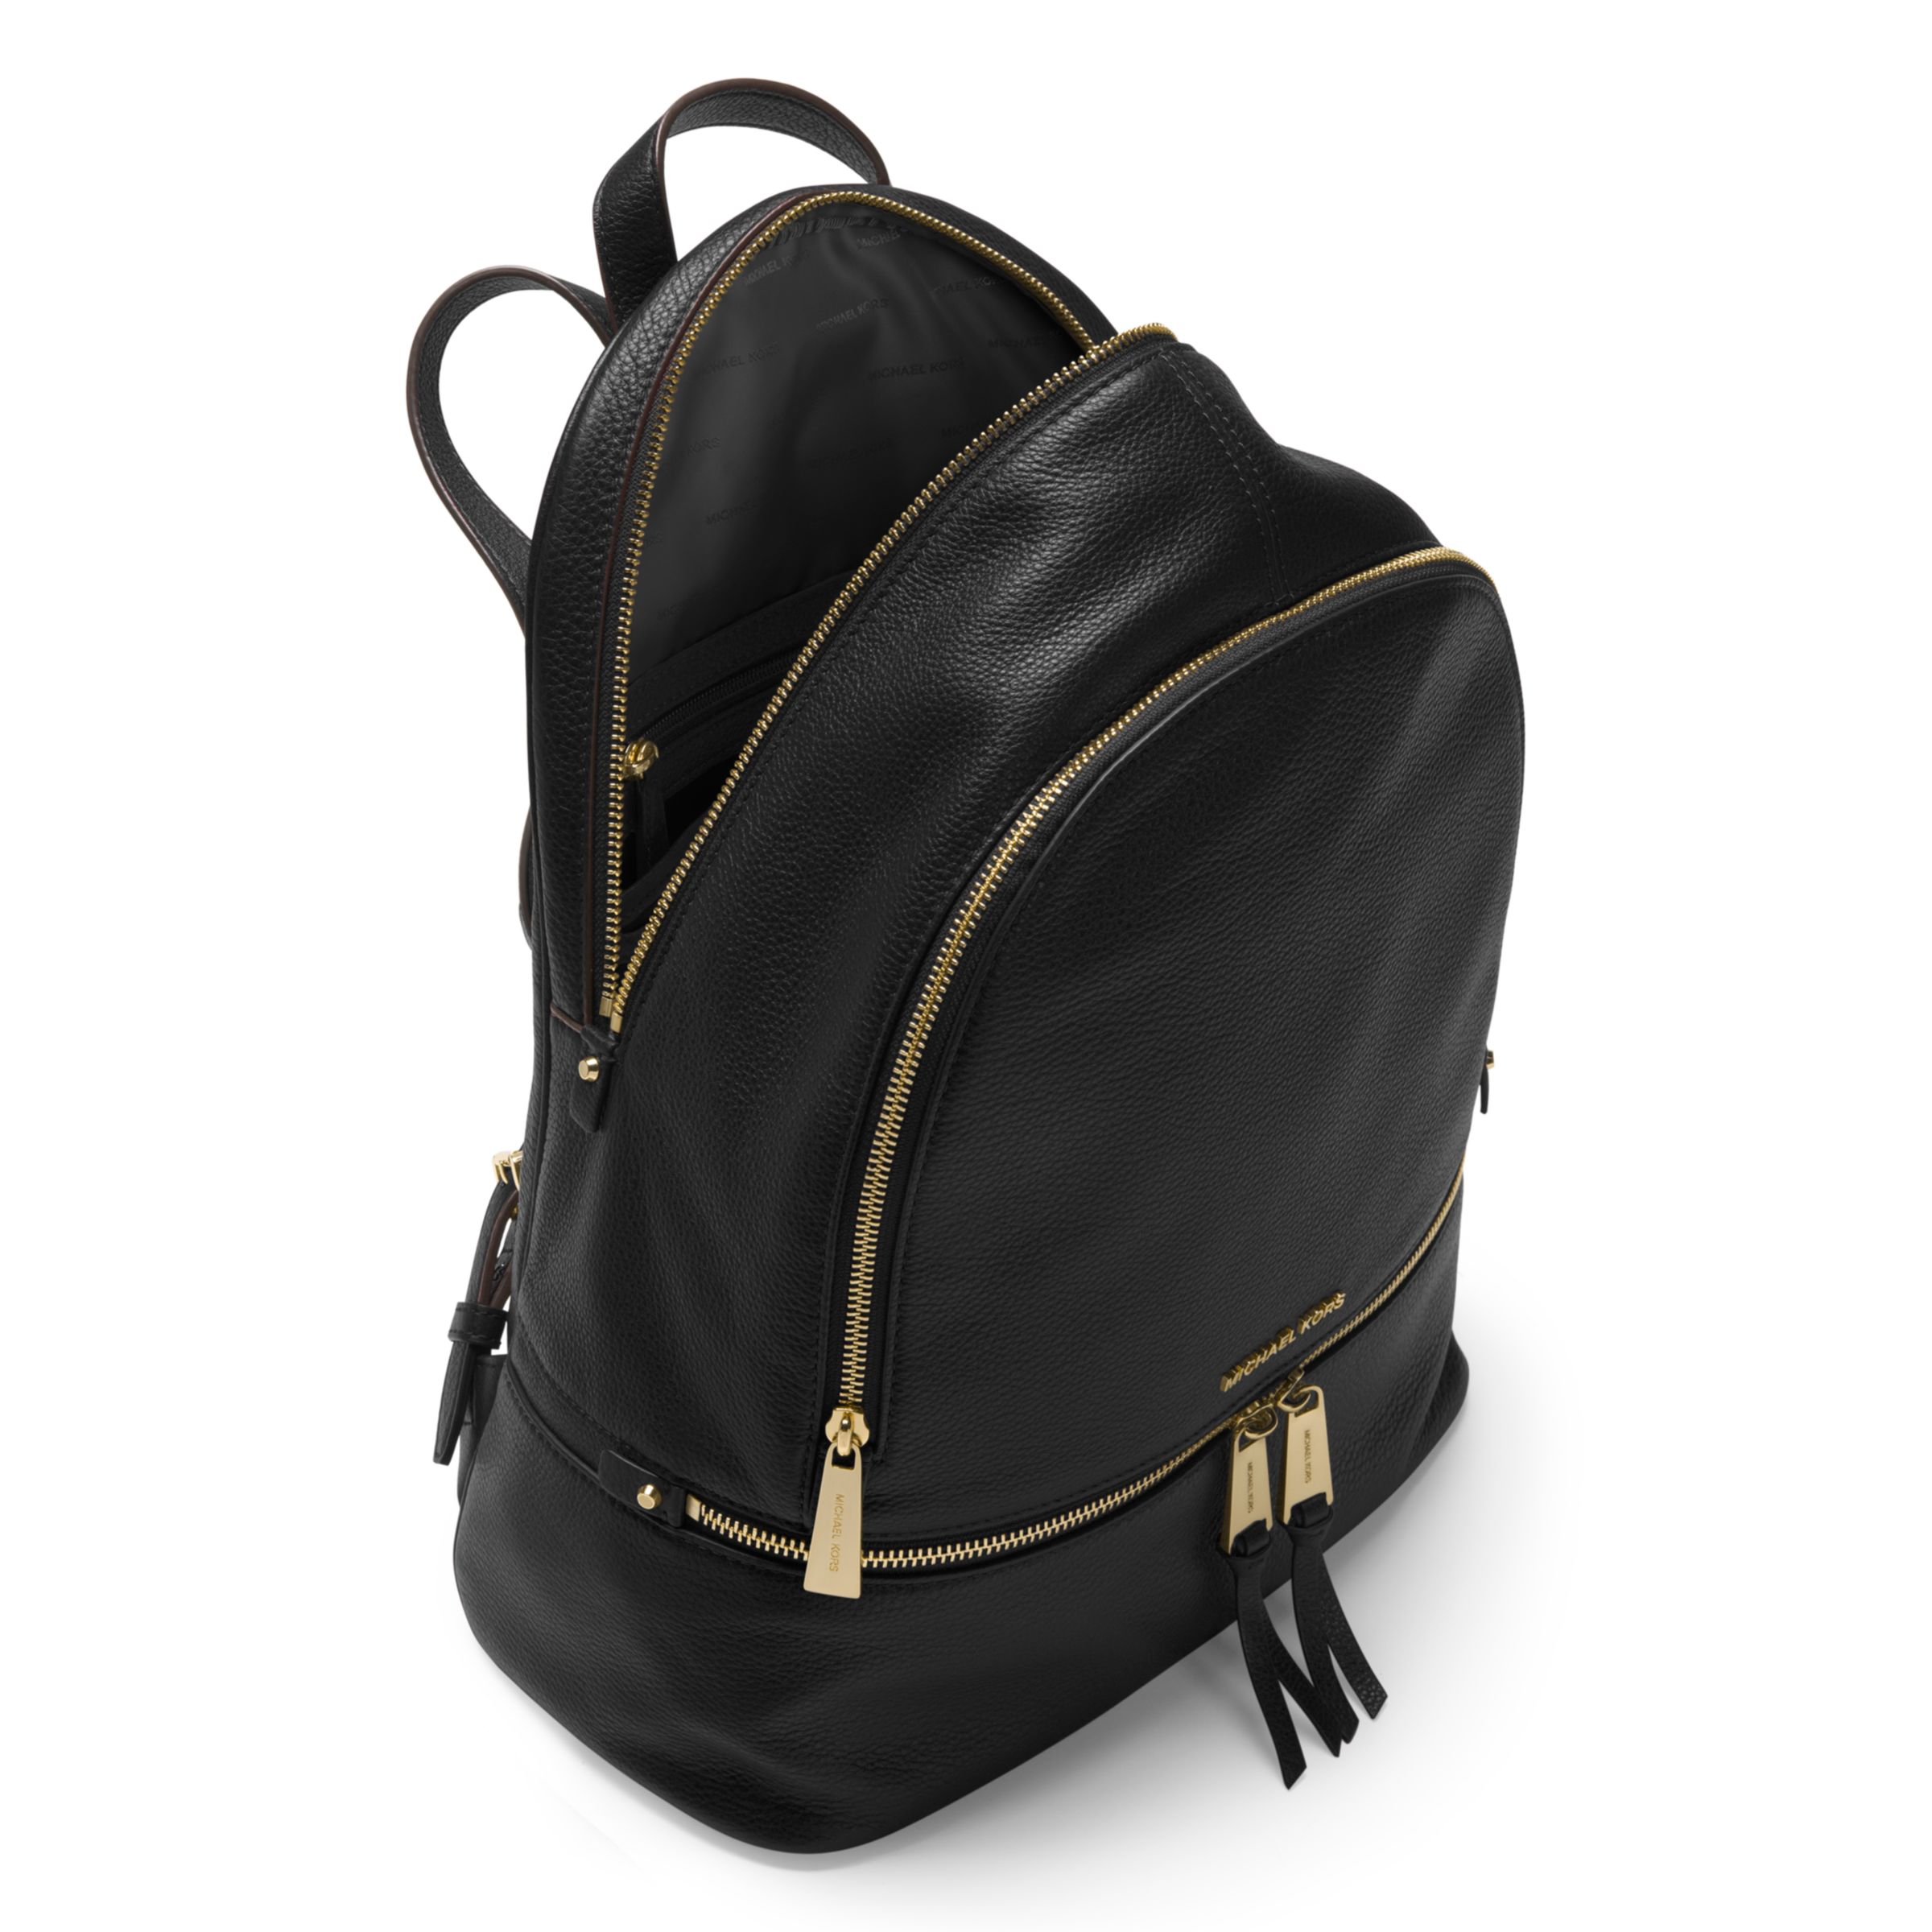 MICHAEL Michael Kors Rhea Leather Large Backpack, Black